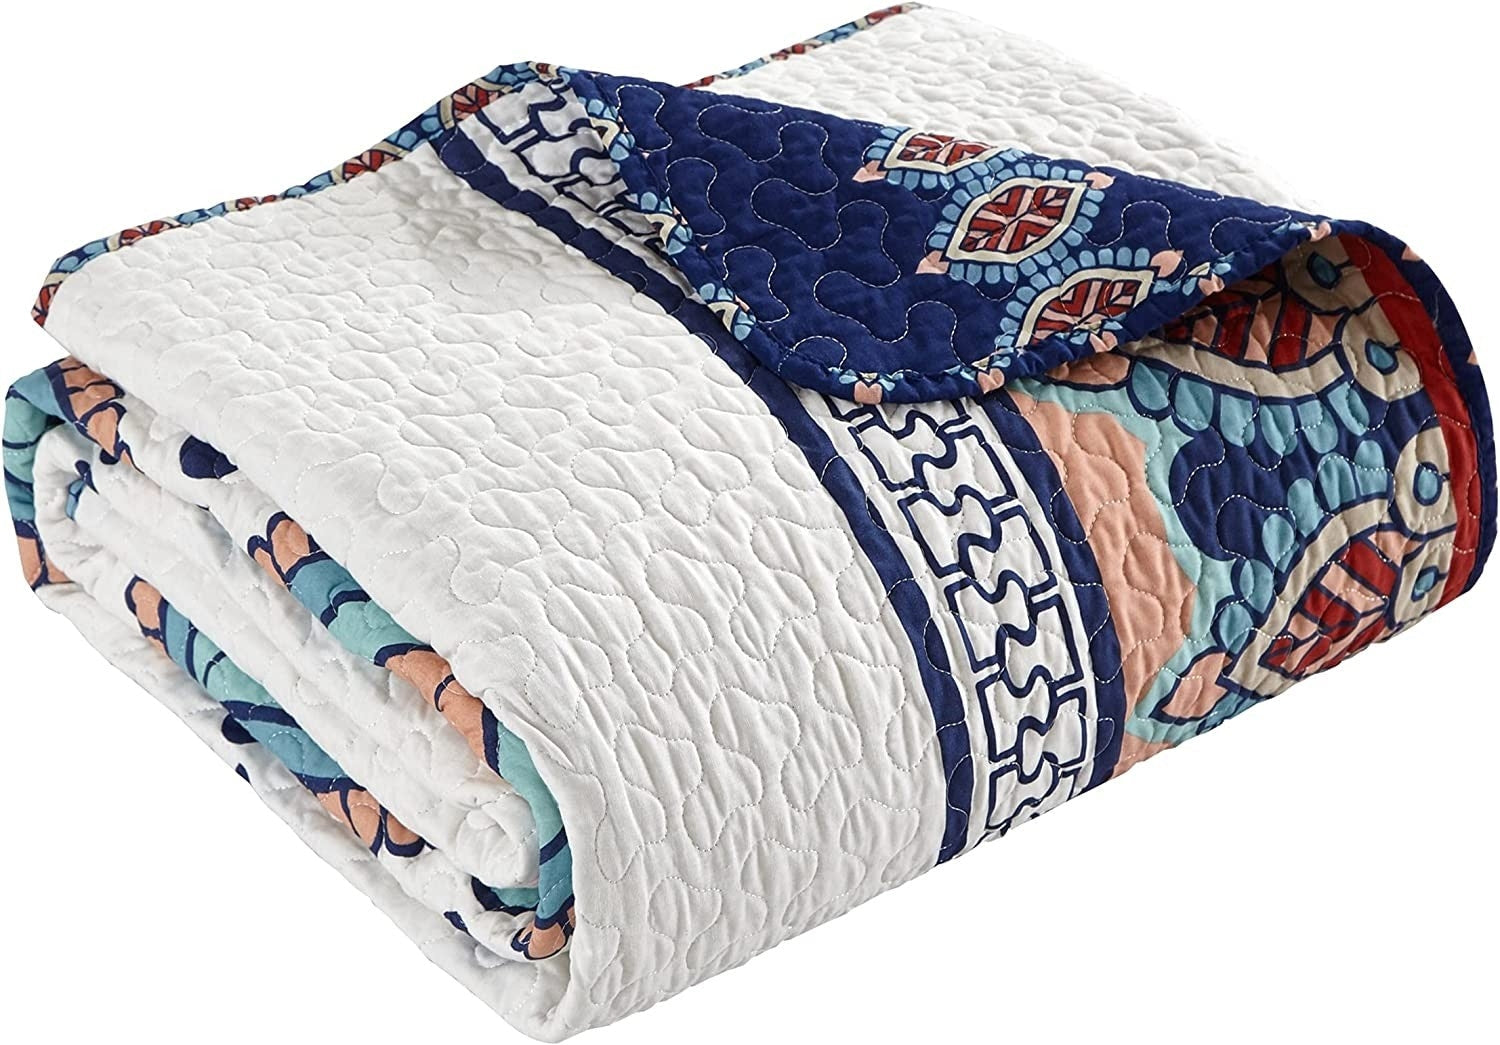 Bedroom > Quilts & Blankets - Queen Size 4 Piece Cotton Blue White Boho Geometric Reversible Quilt Set